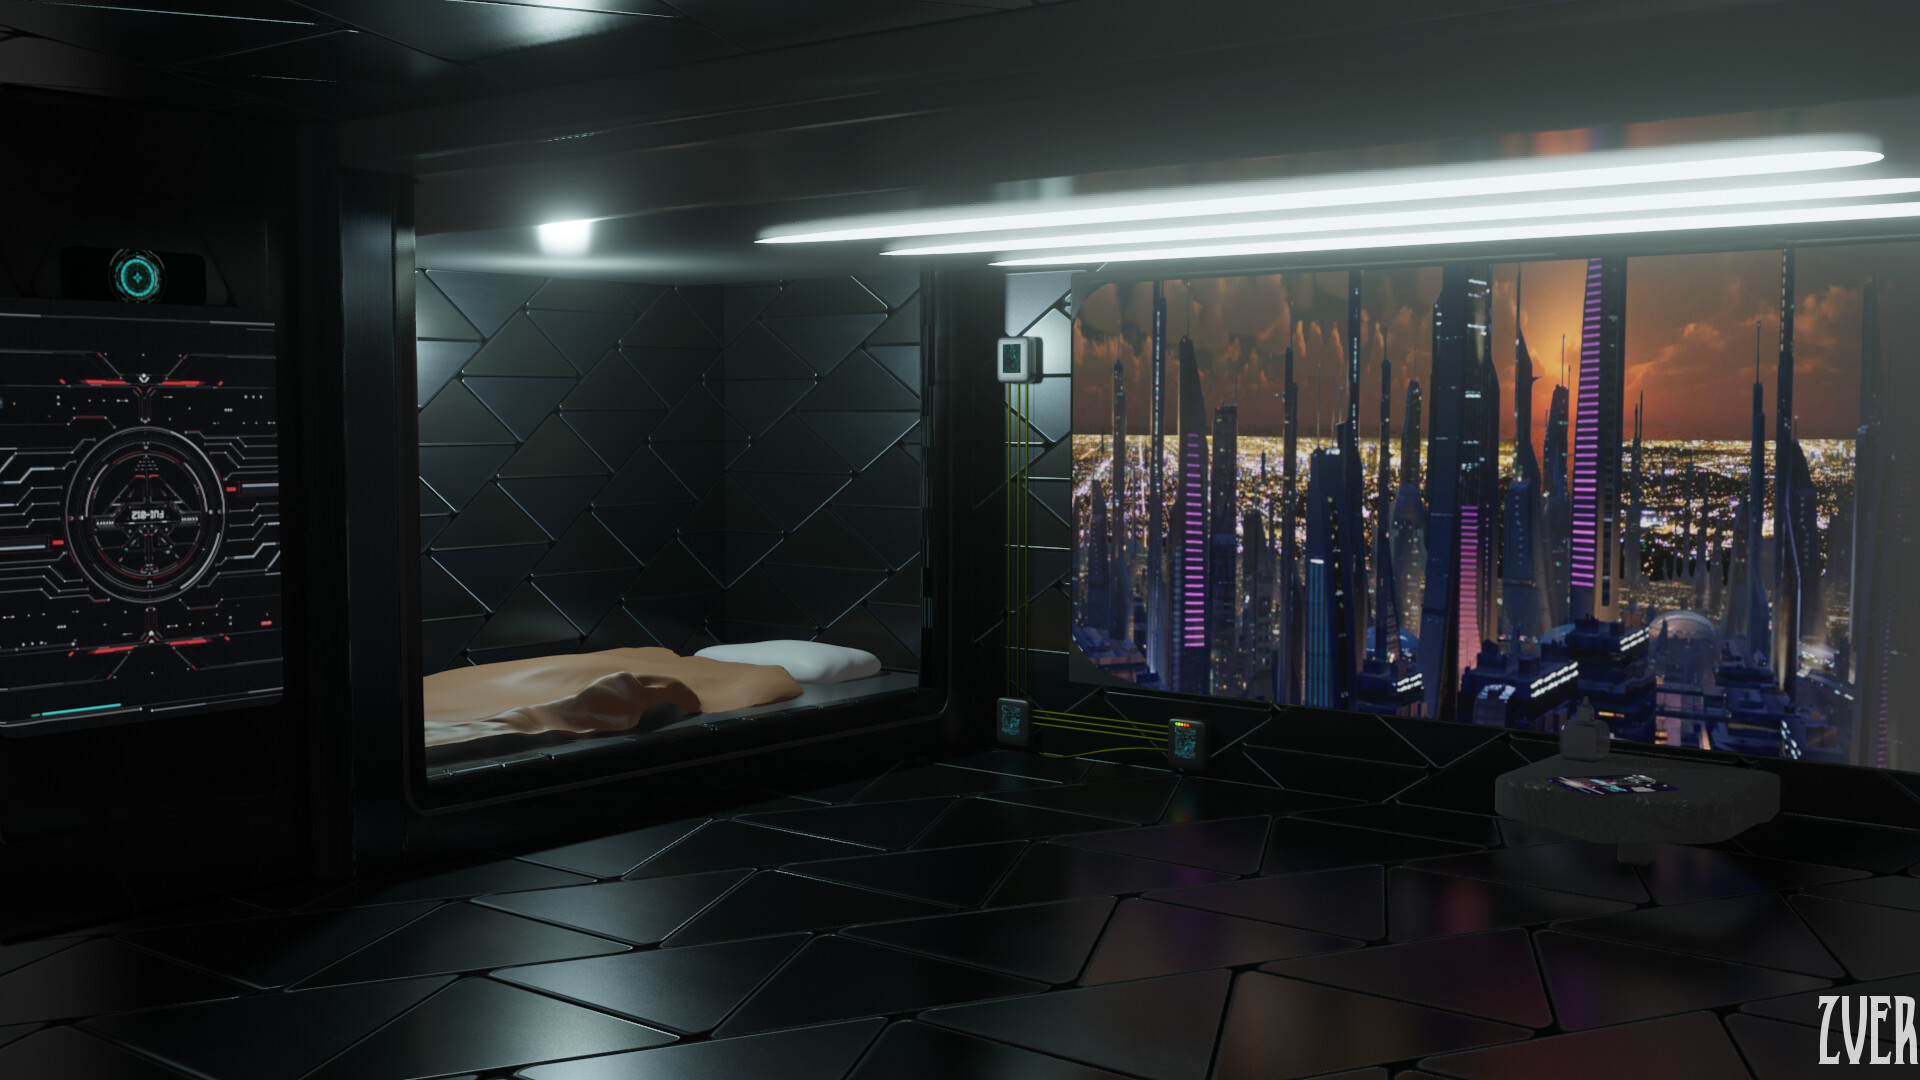 ArtStation - Cyberpunk apartment concept